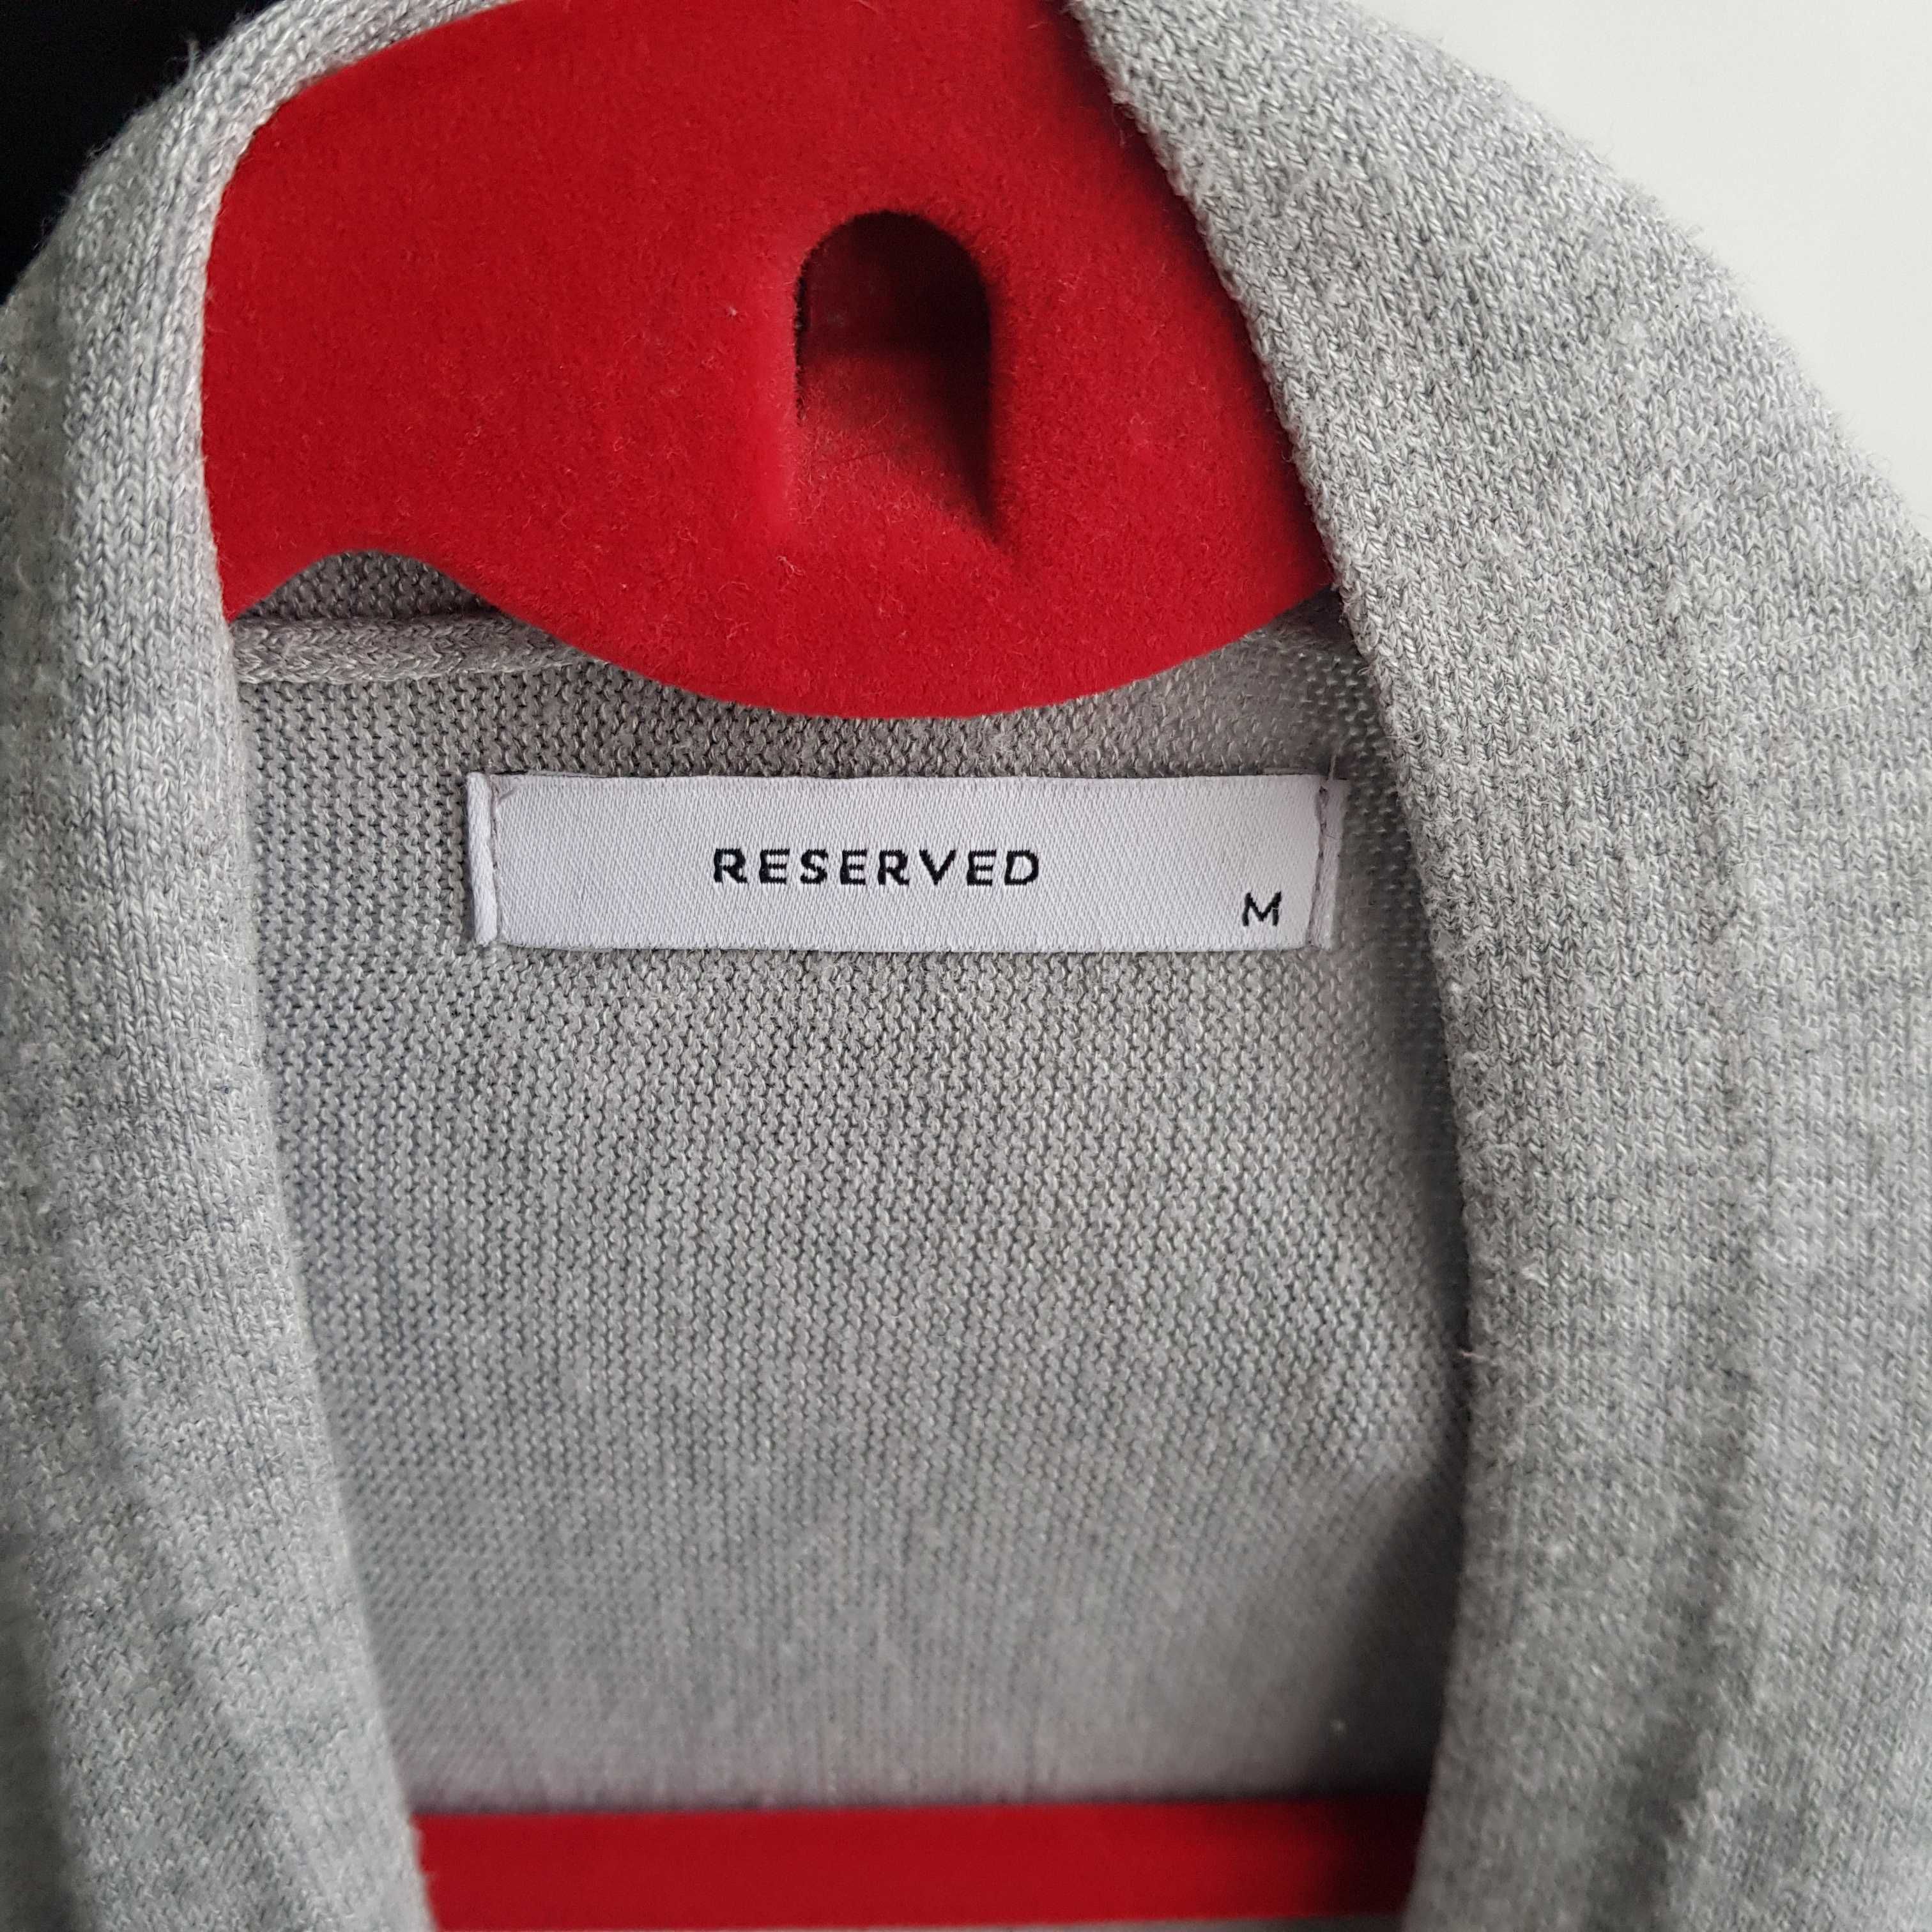 Szary kardigan sweterek Reserved rozmiar M